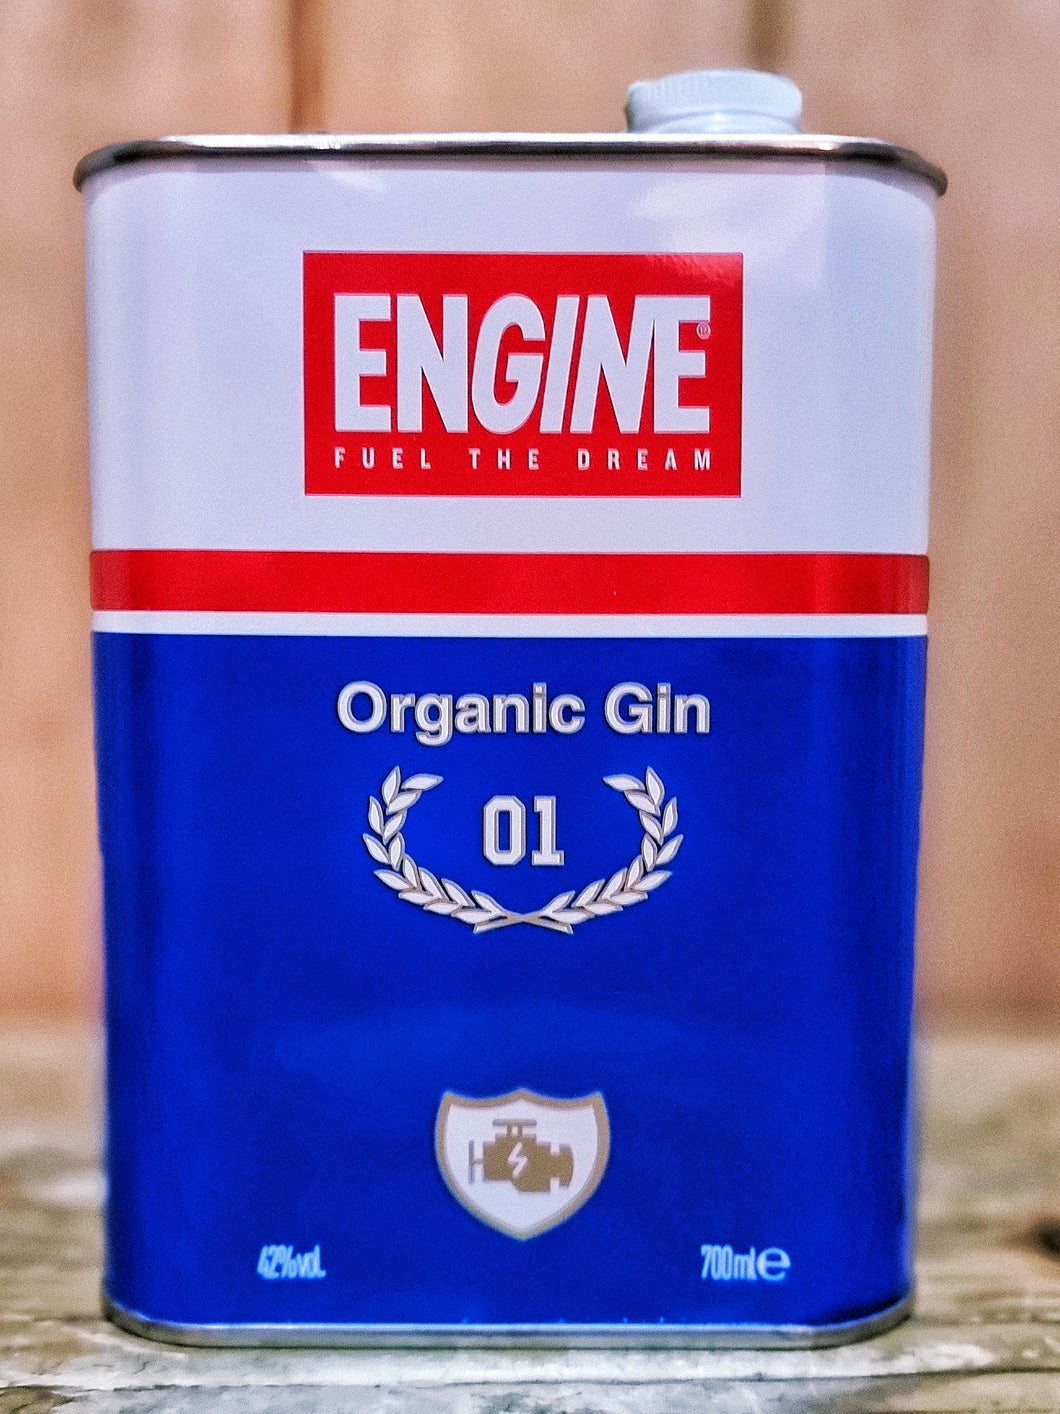 Engine Gin